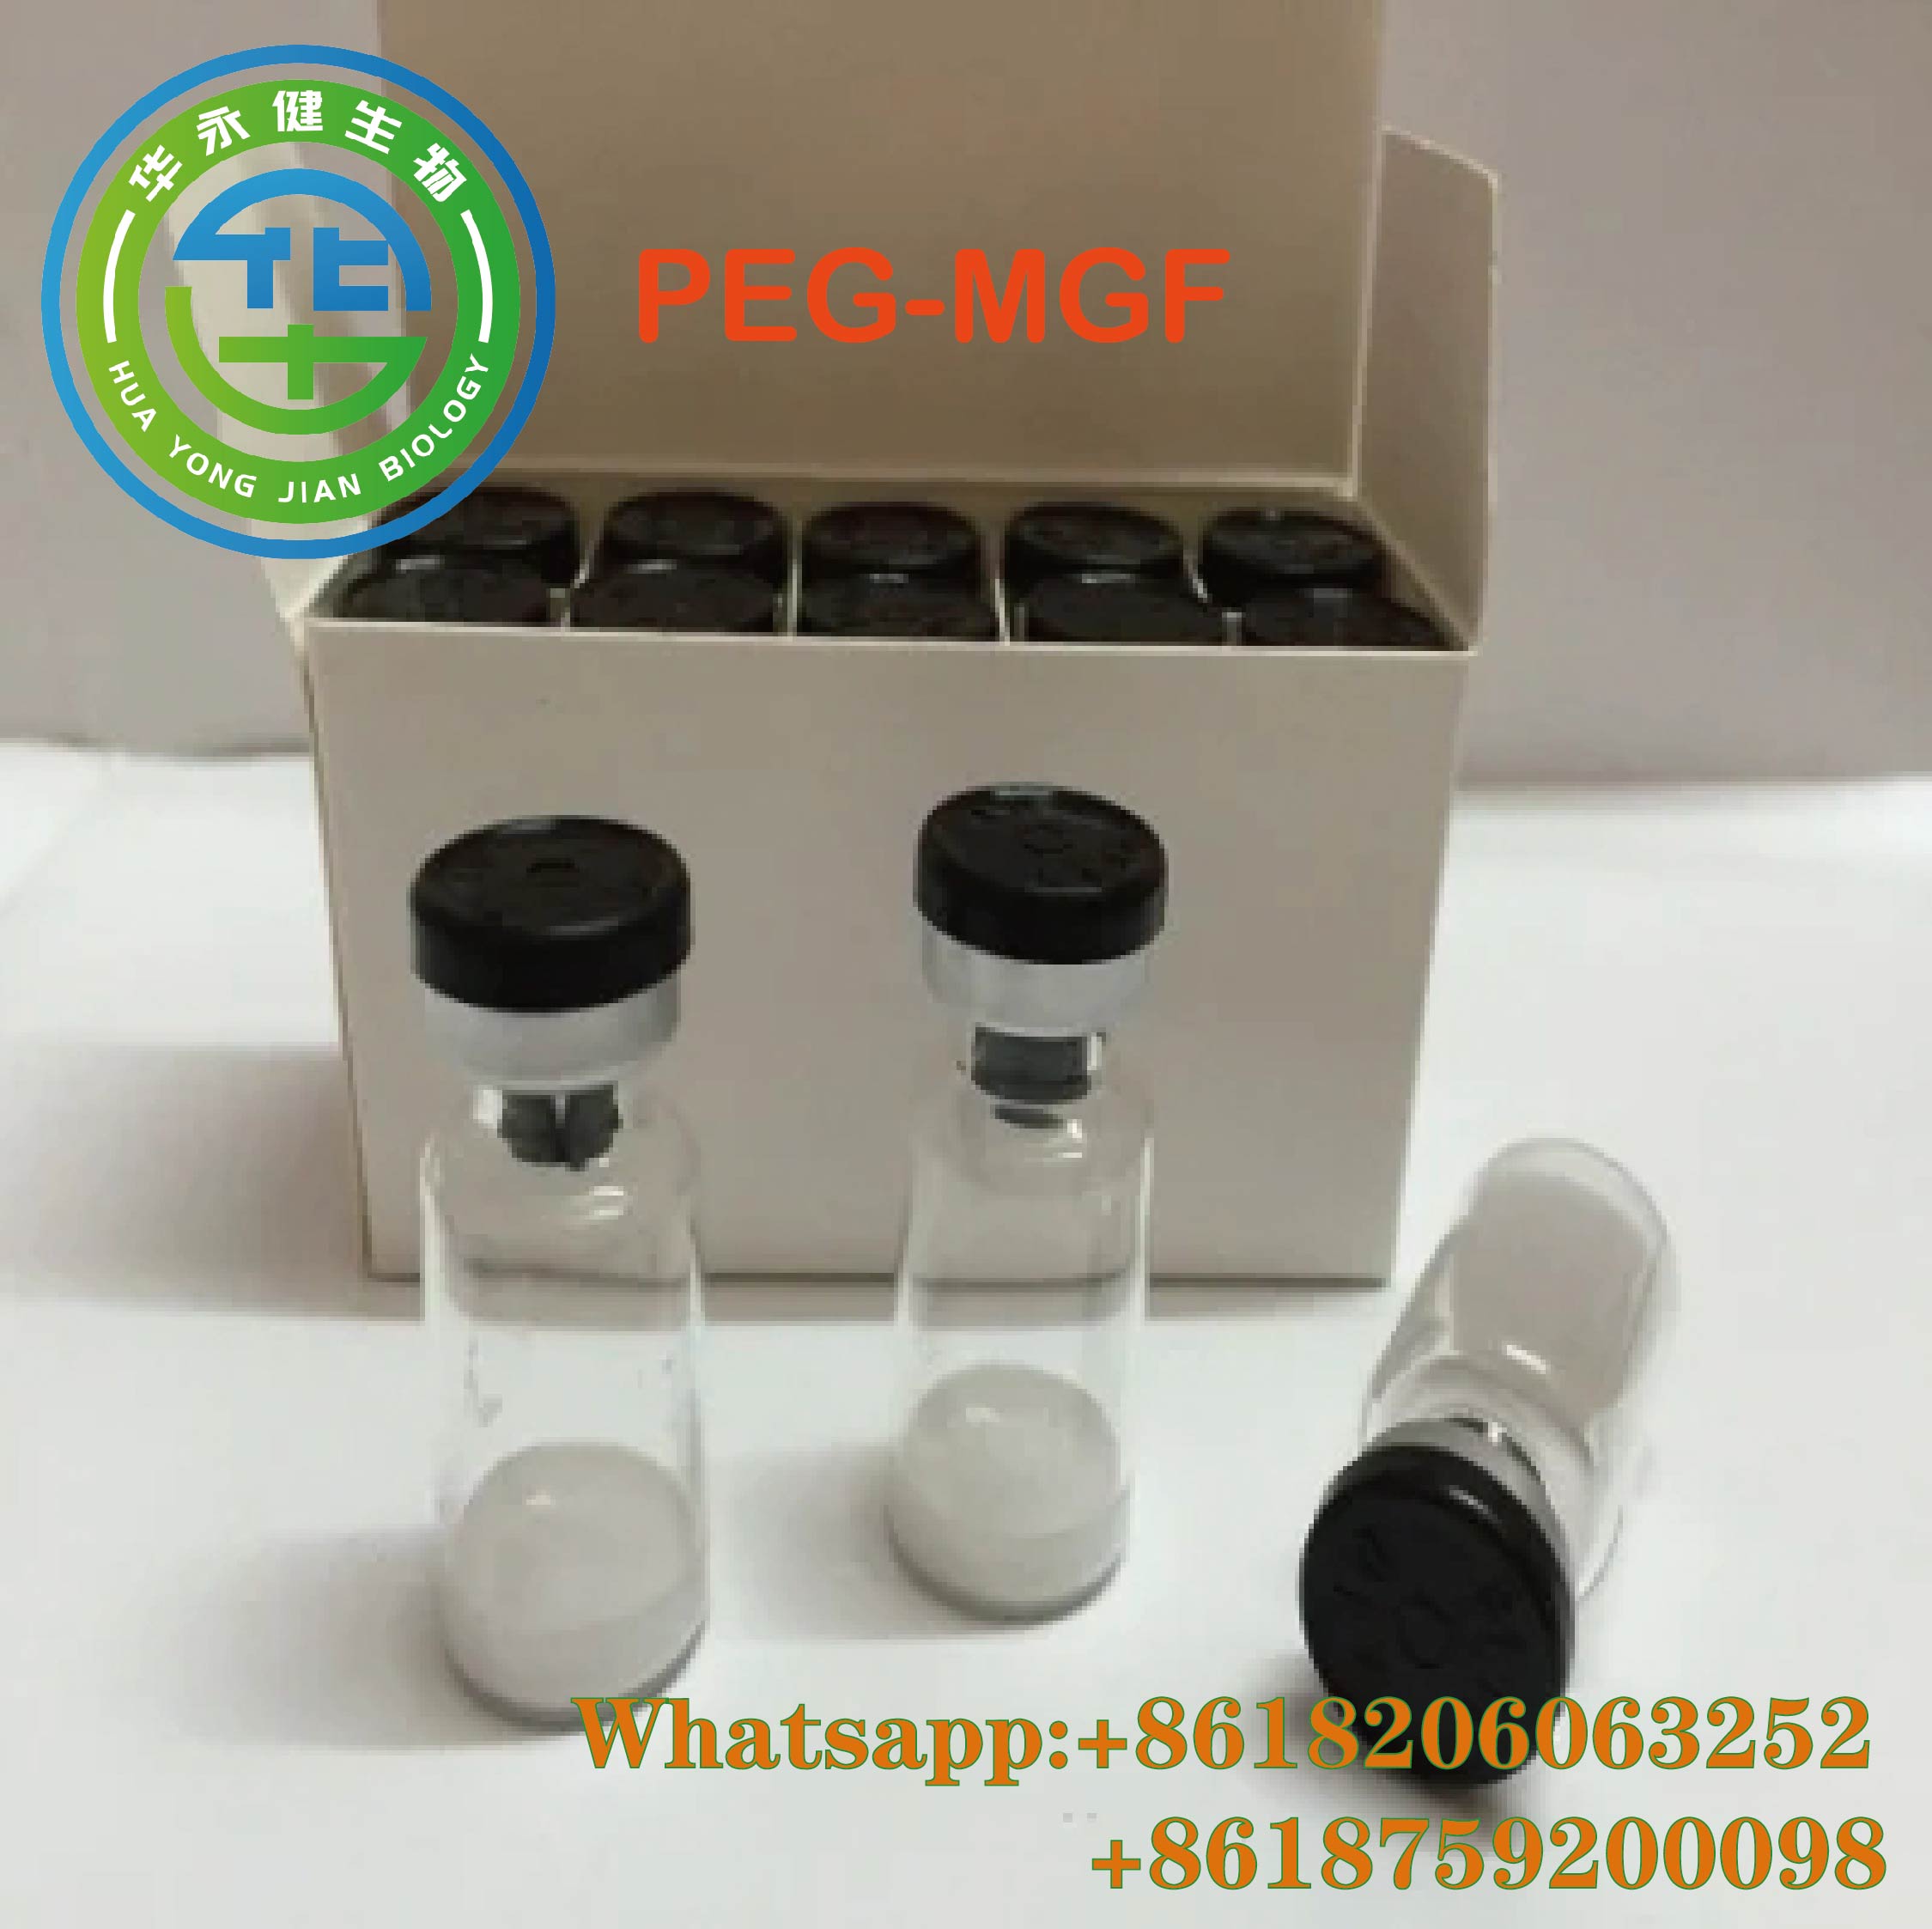  Peptide Bodybuilding PEG-MGF Raw Powder with USA UK Local Shipping Steroids Raw Powder CasNO. 62031-54-3 Hormone Powder